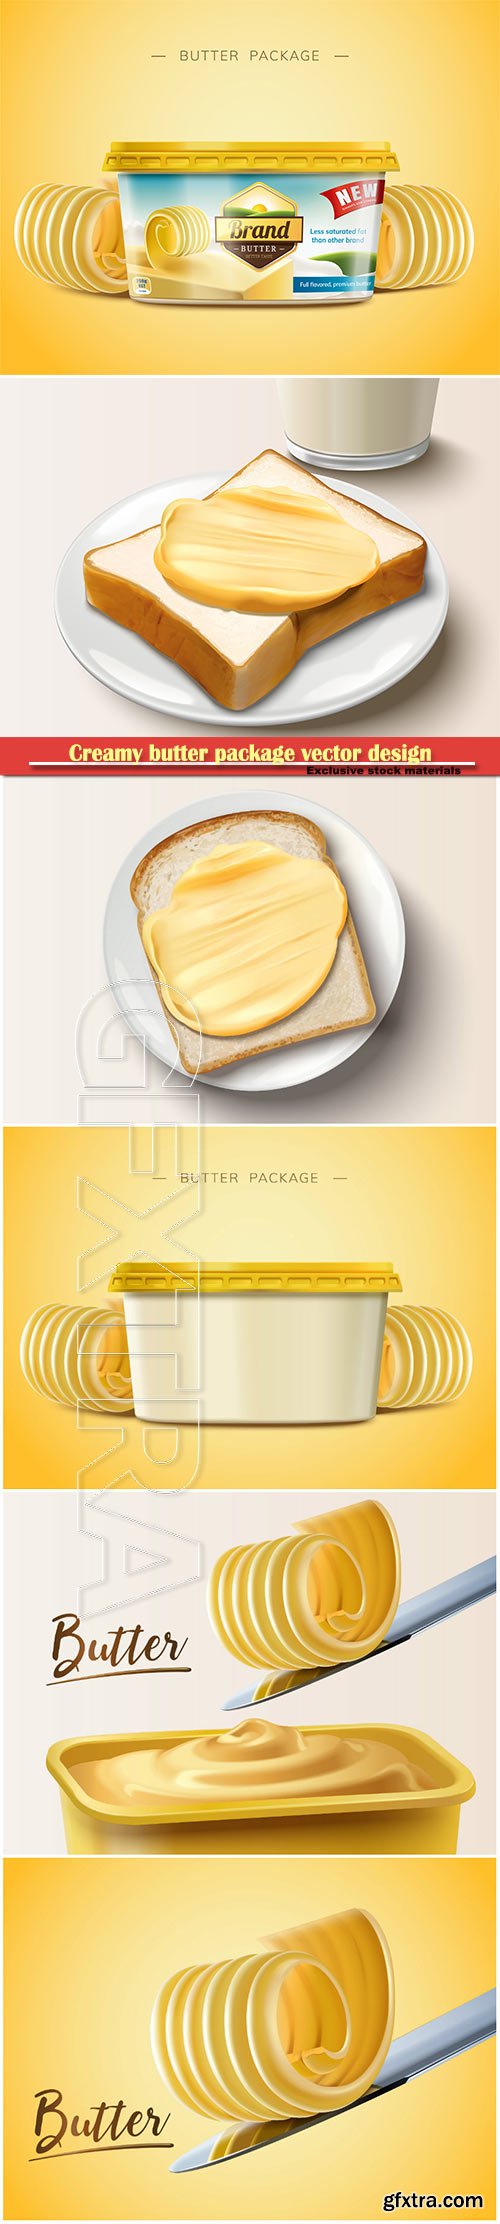 Creamy butter package vector design